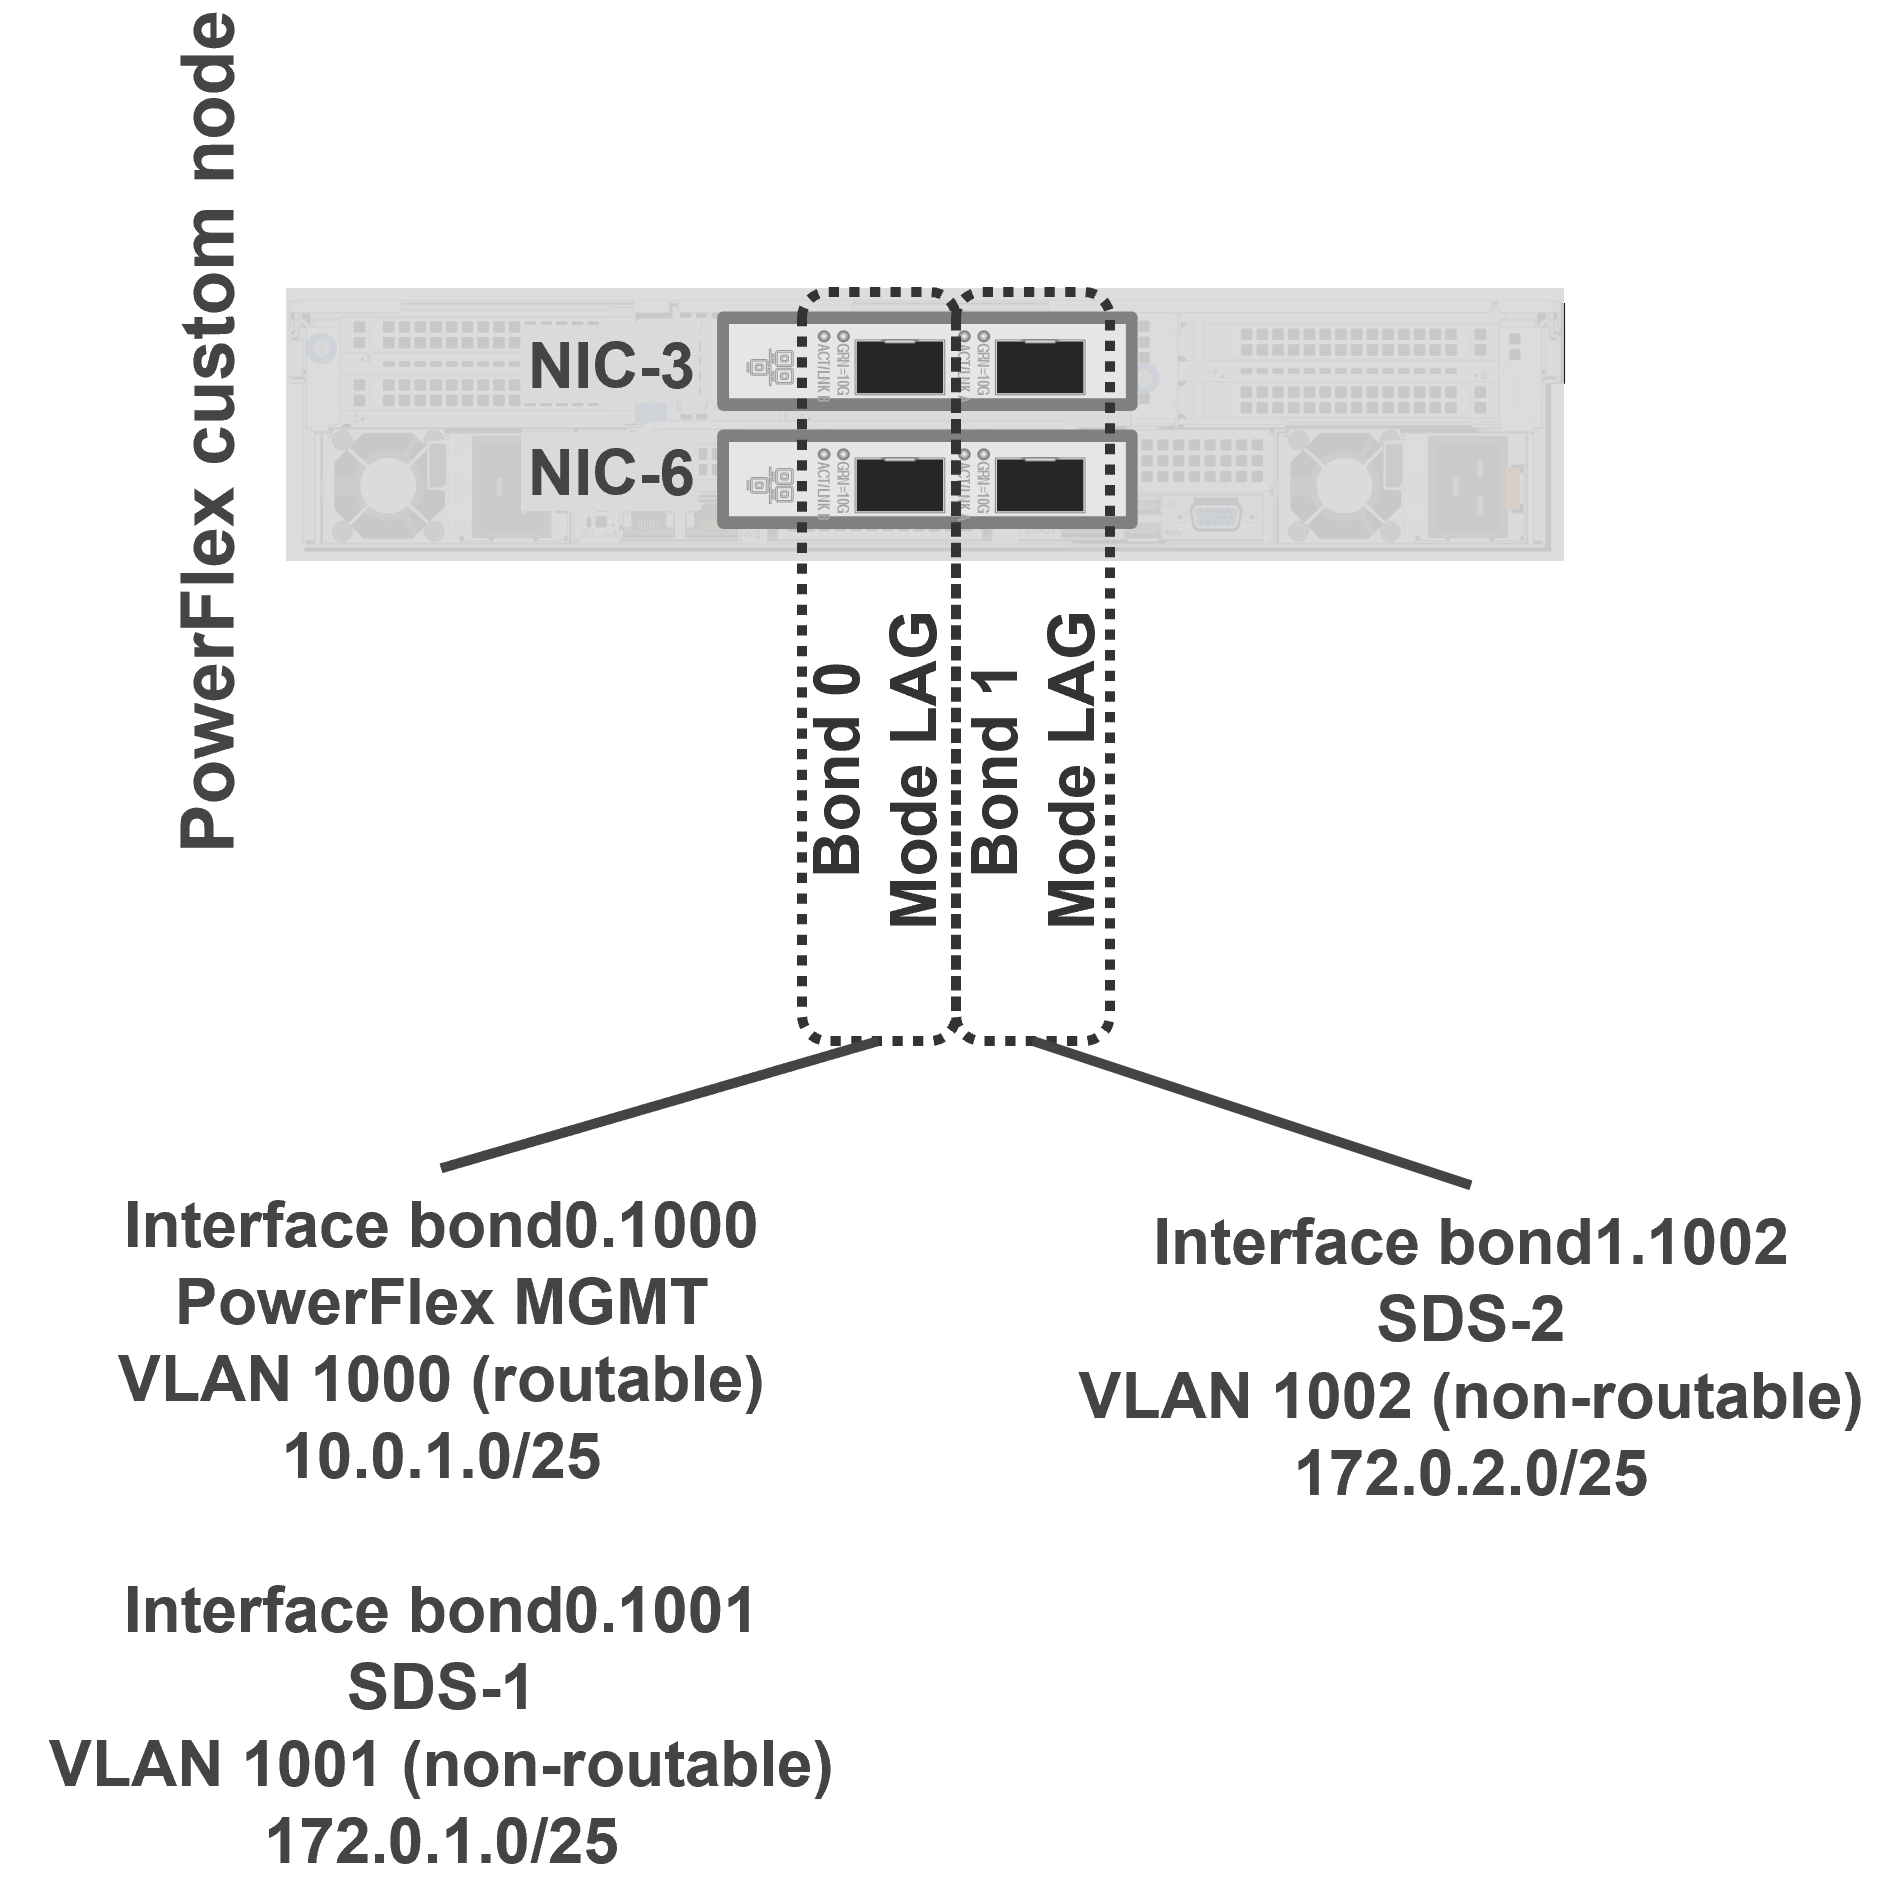 PowerFlex node networking configuration